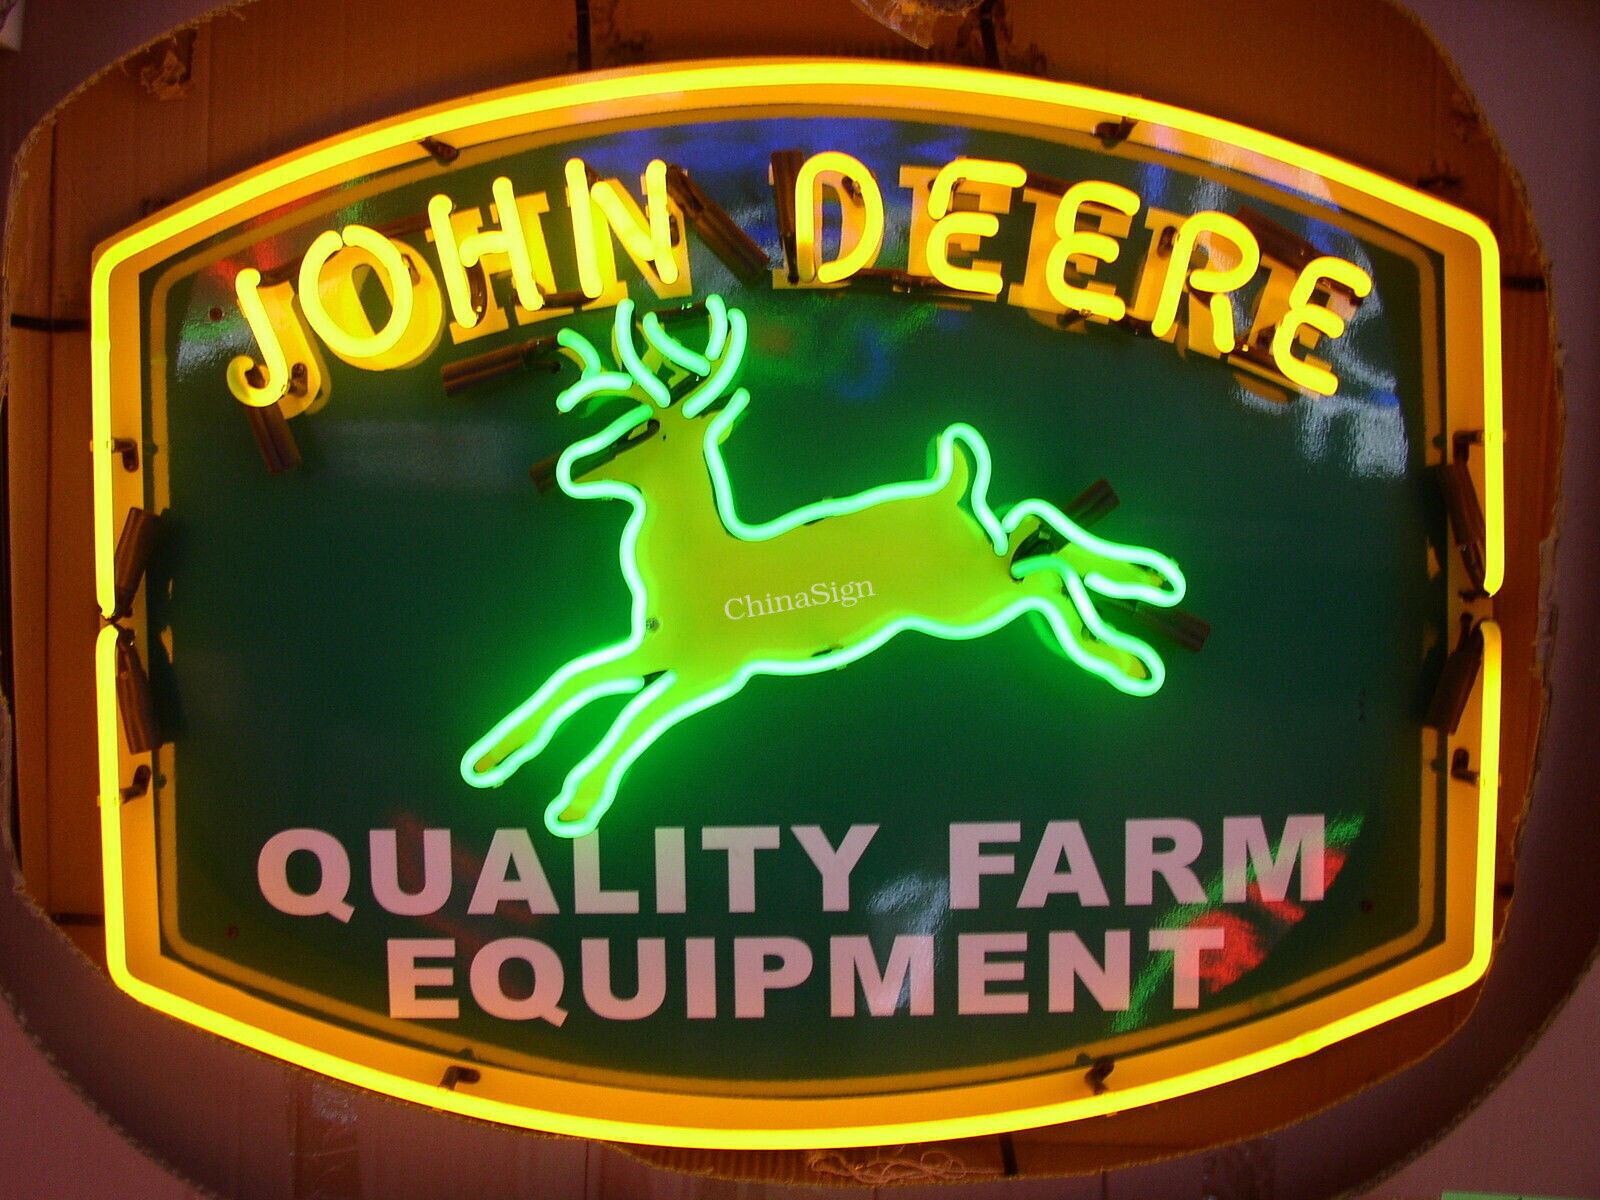 New JOHN DEERE Quality Farm Equipment Tractor Real Glass Neon Sign Beer Light